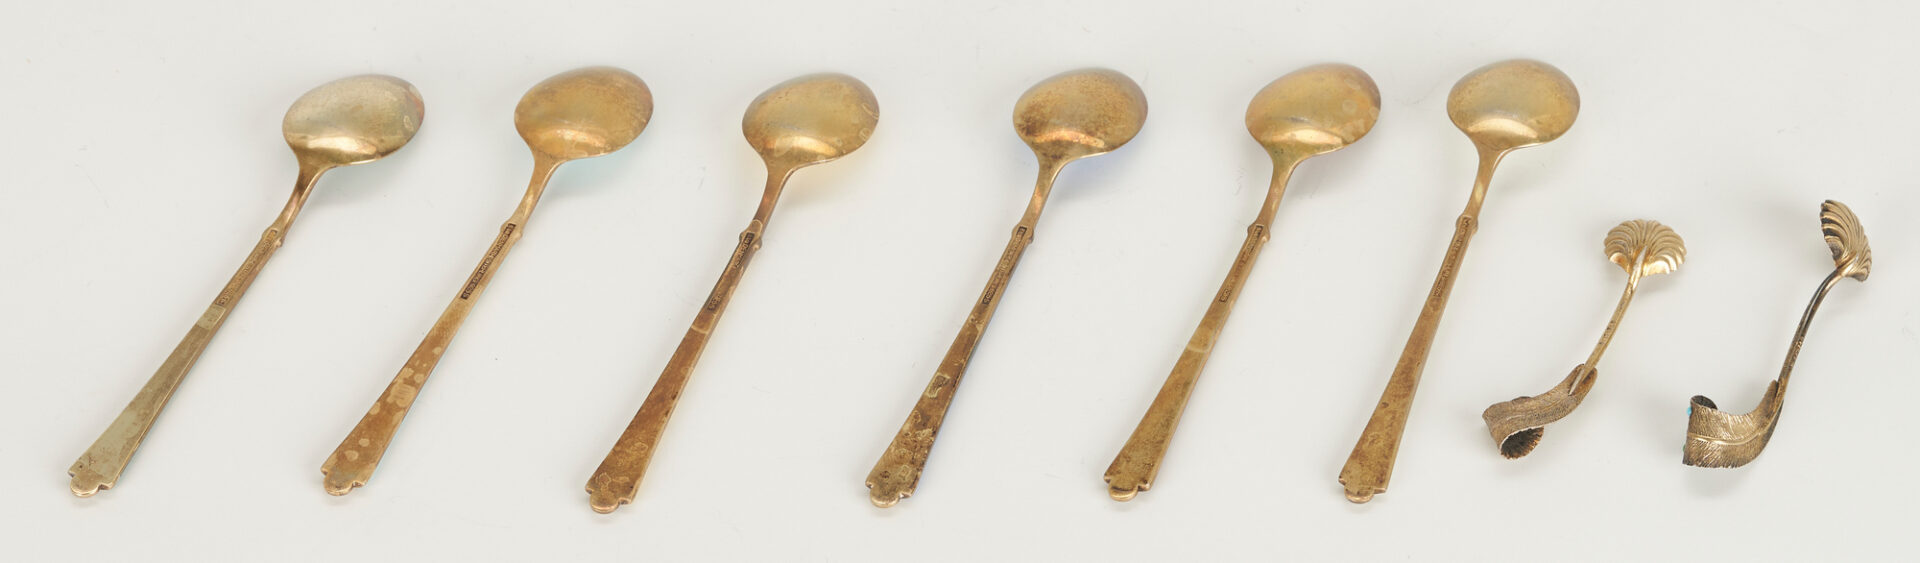 Lot 1134: 32 Pcs. Assd. Silver, incl. Napkin Rings, Ornaments, Danish Spoons